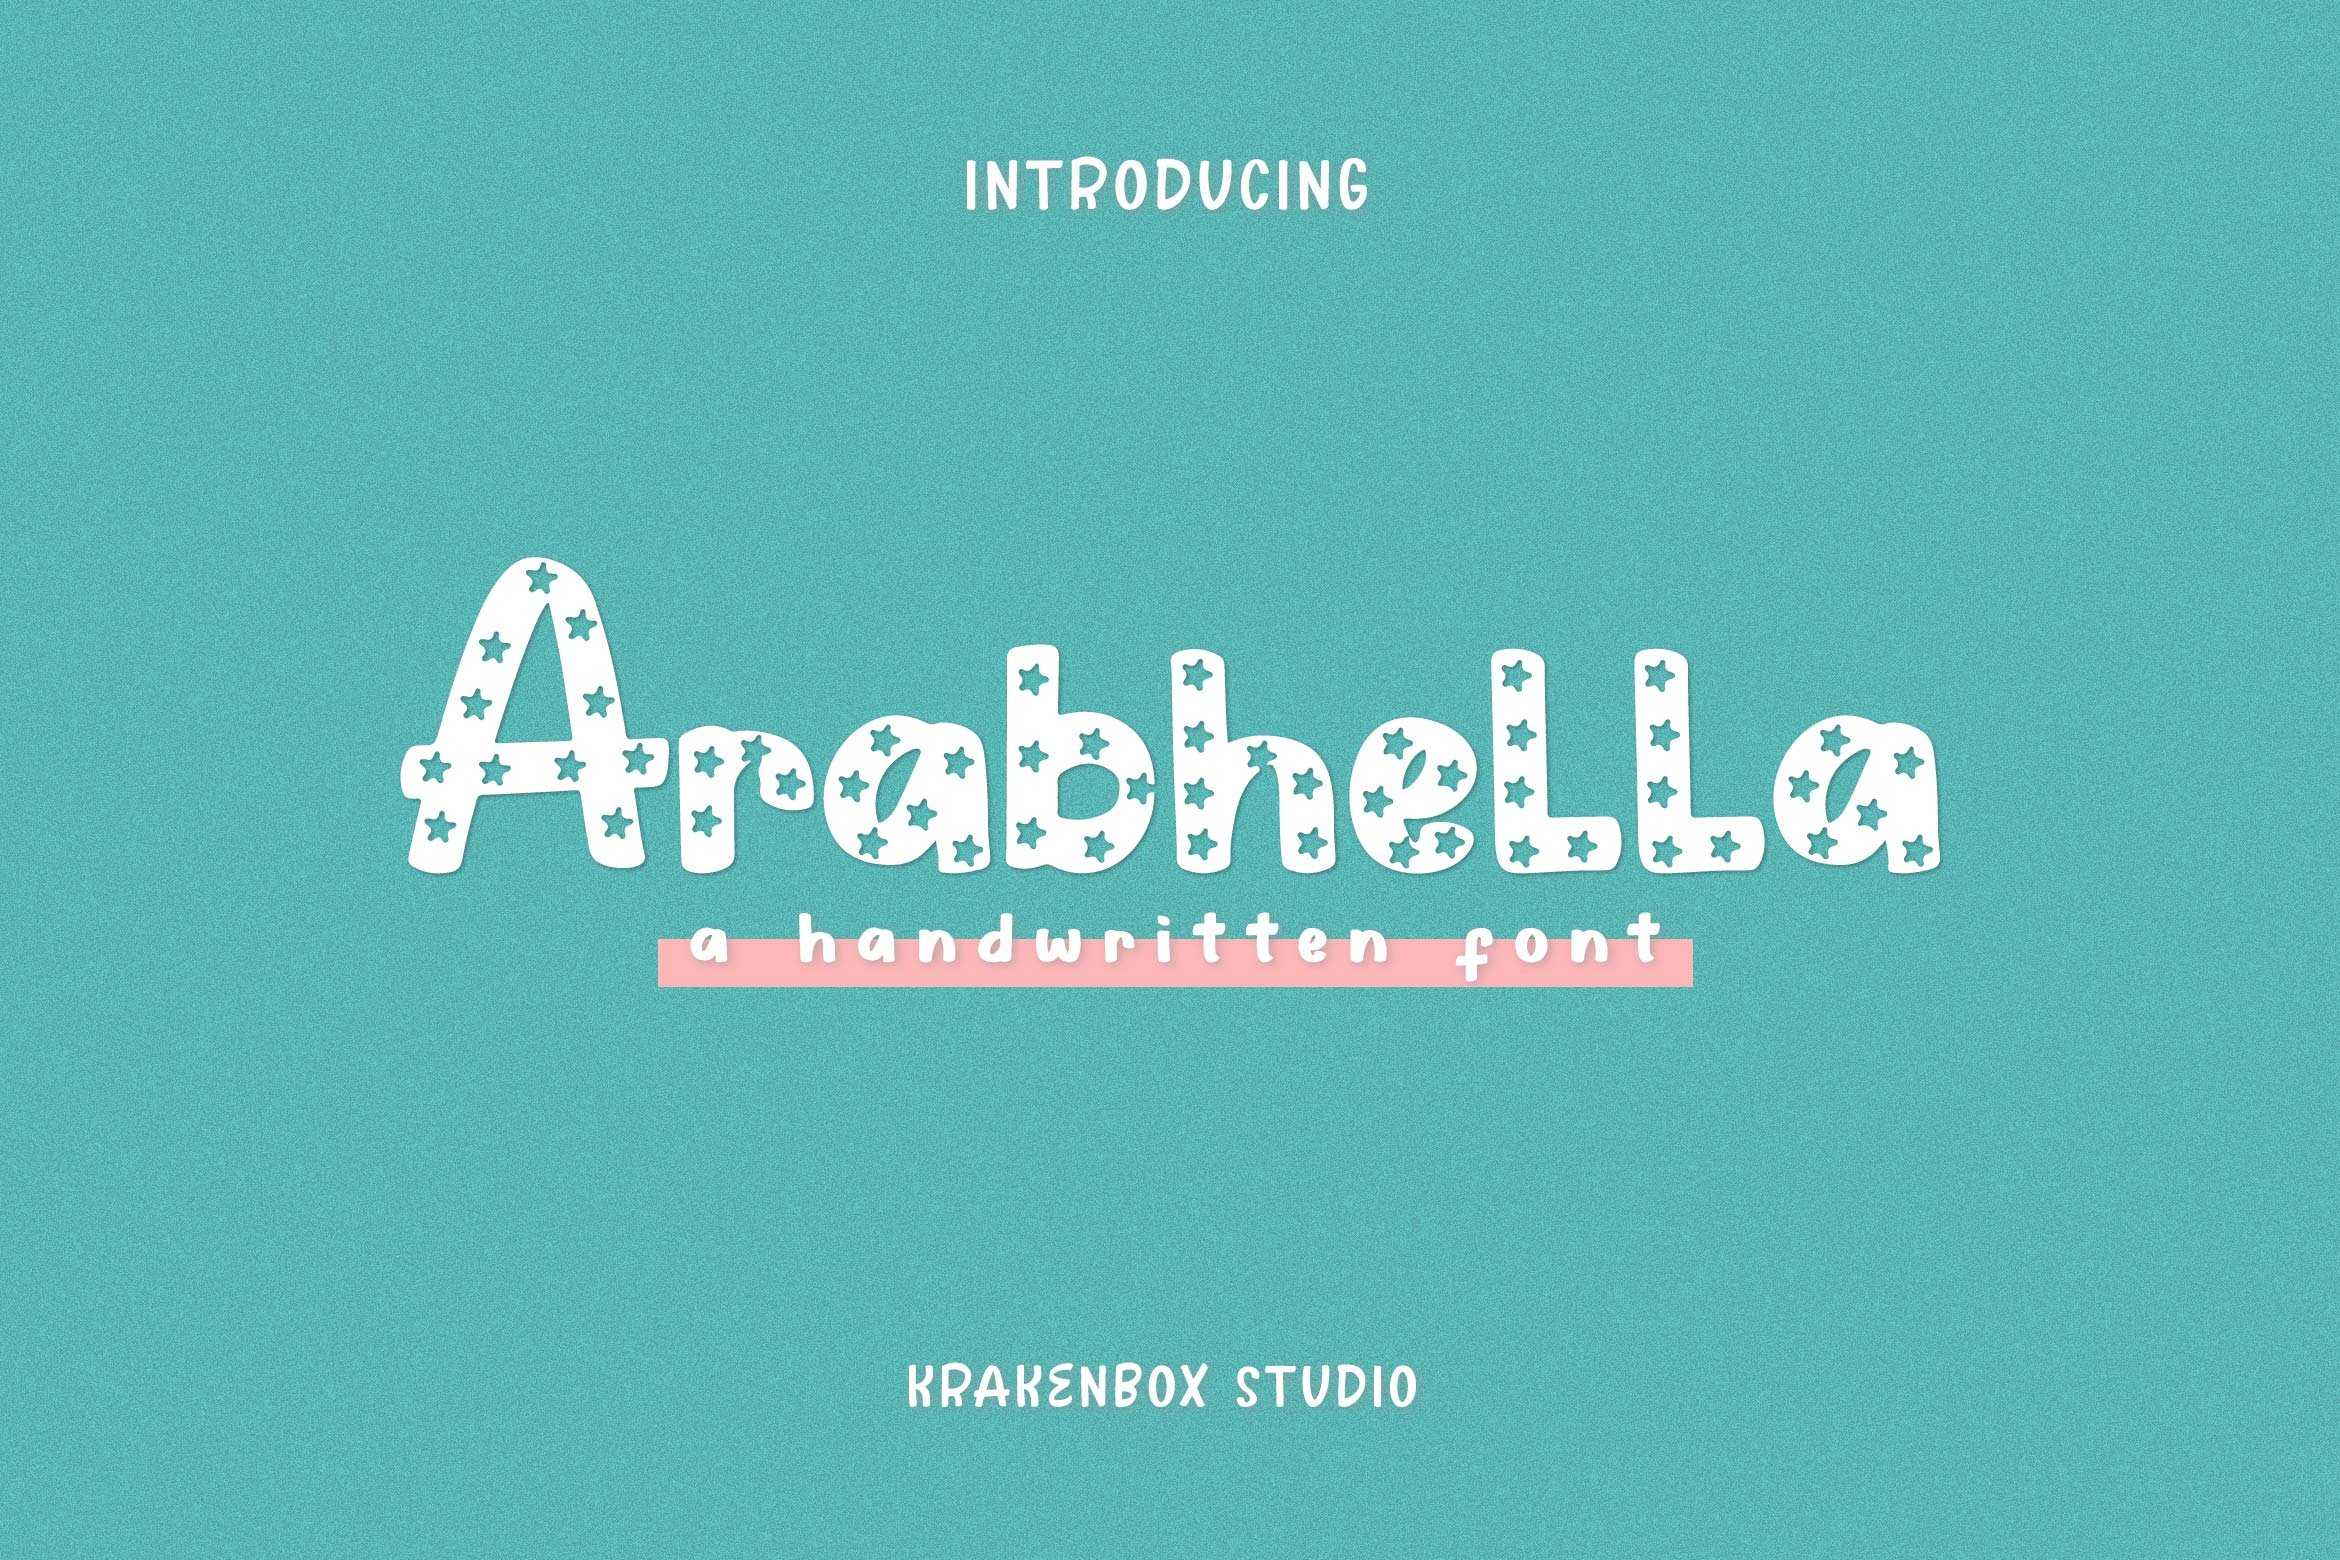 Arabhella - Display Font cover image.